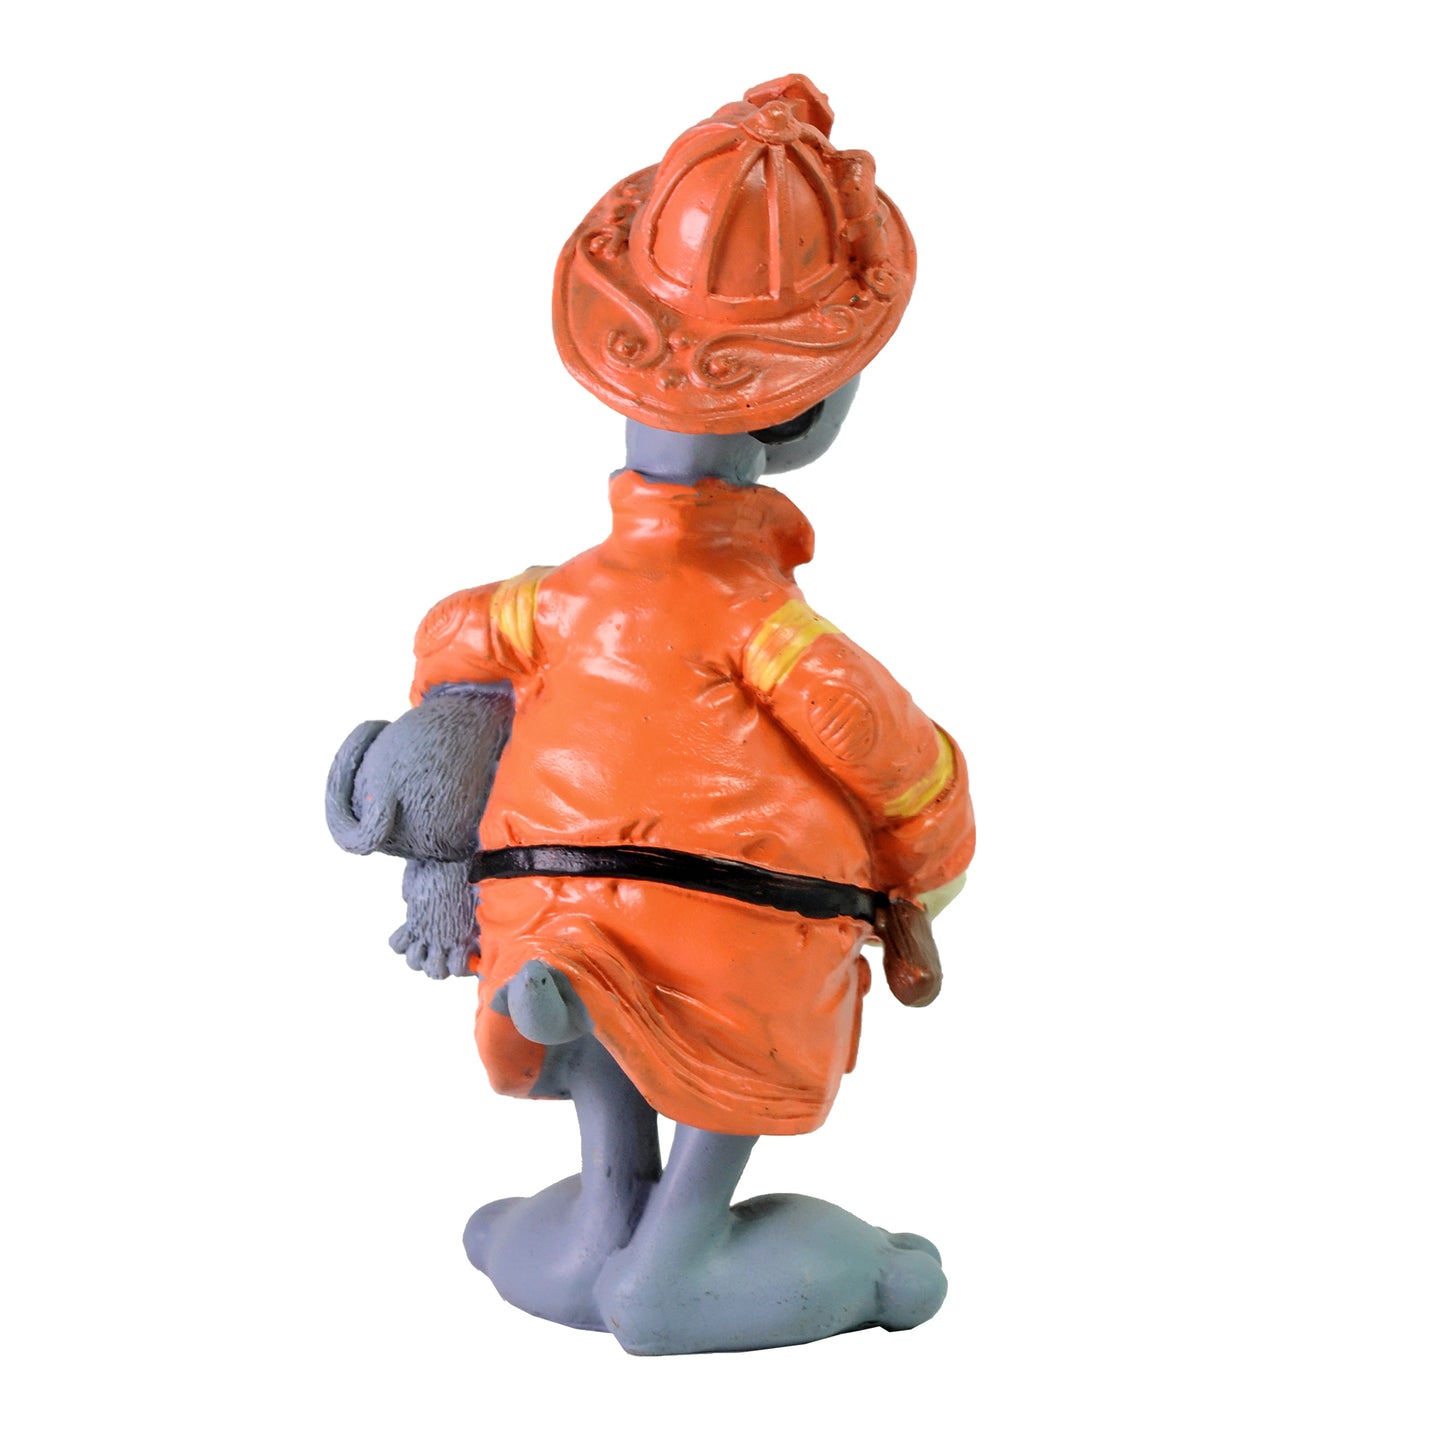 Fireman Dog Figurine by Crystal Castle®